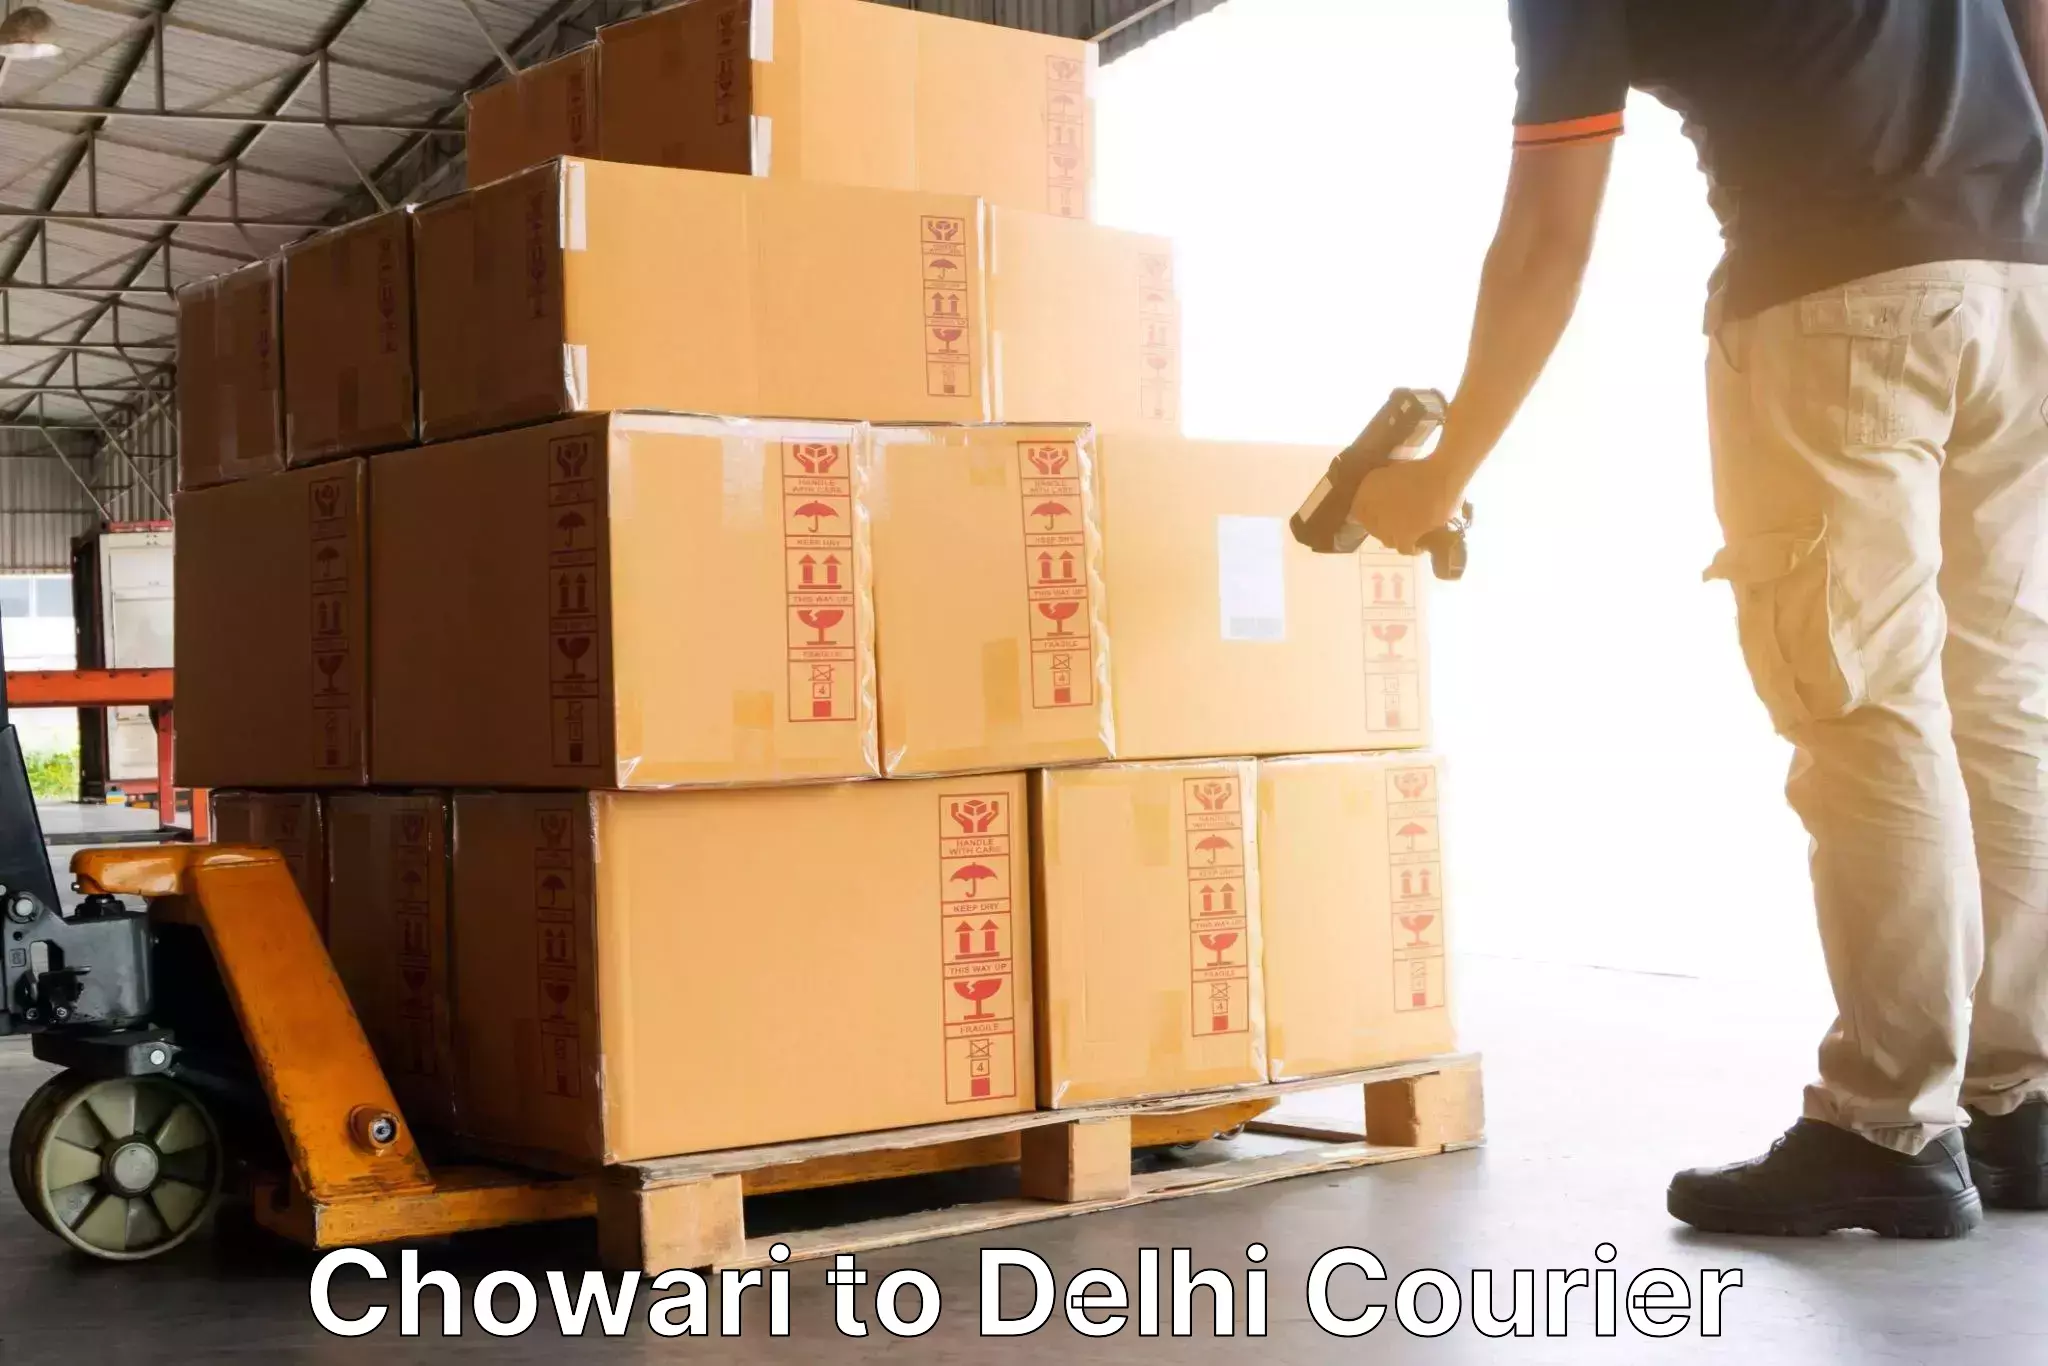 Next-day delivery options Chowari to Sarojini Nagar